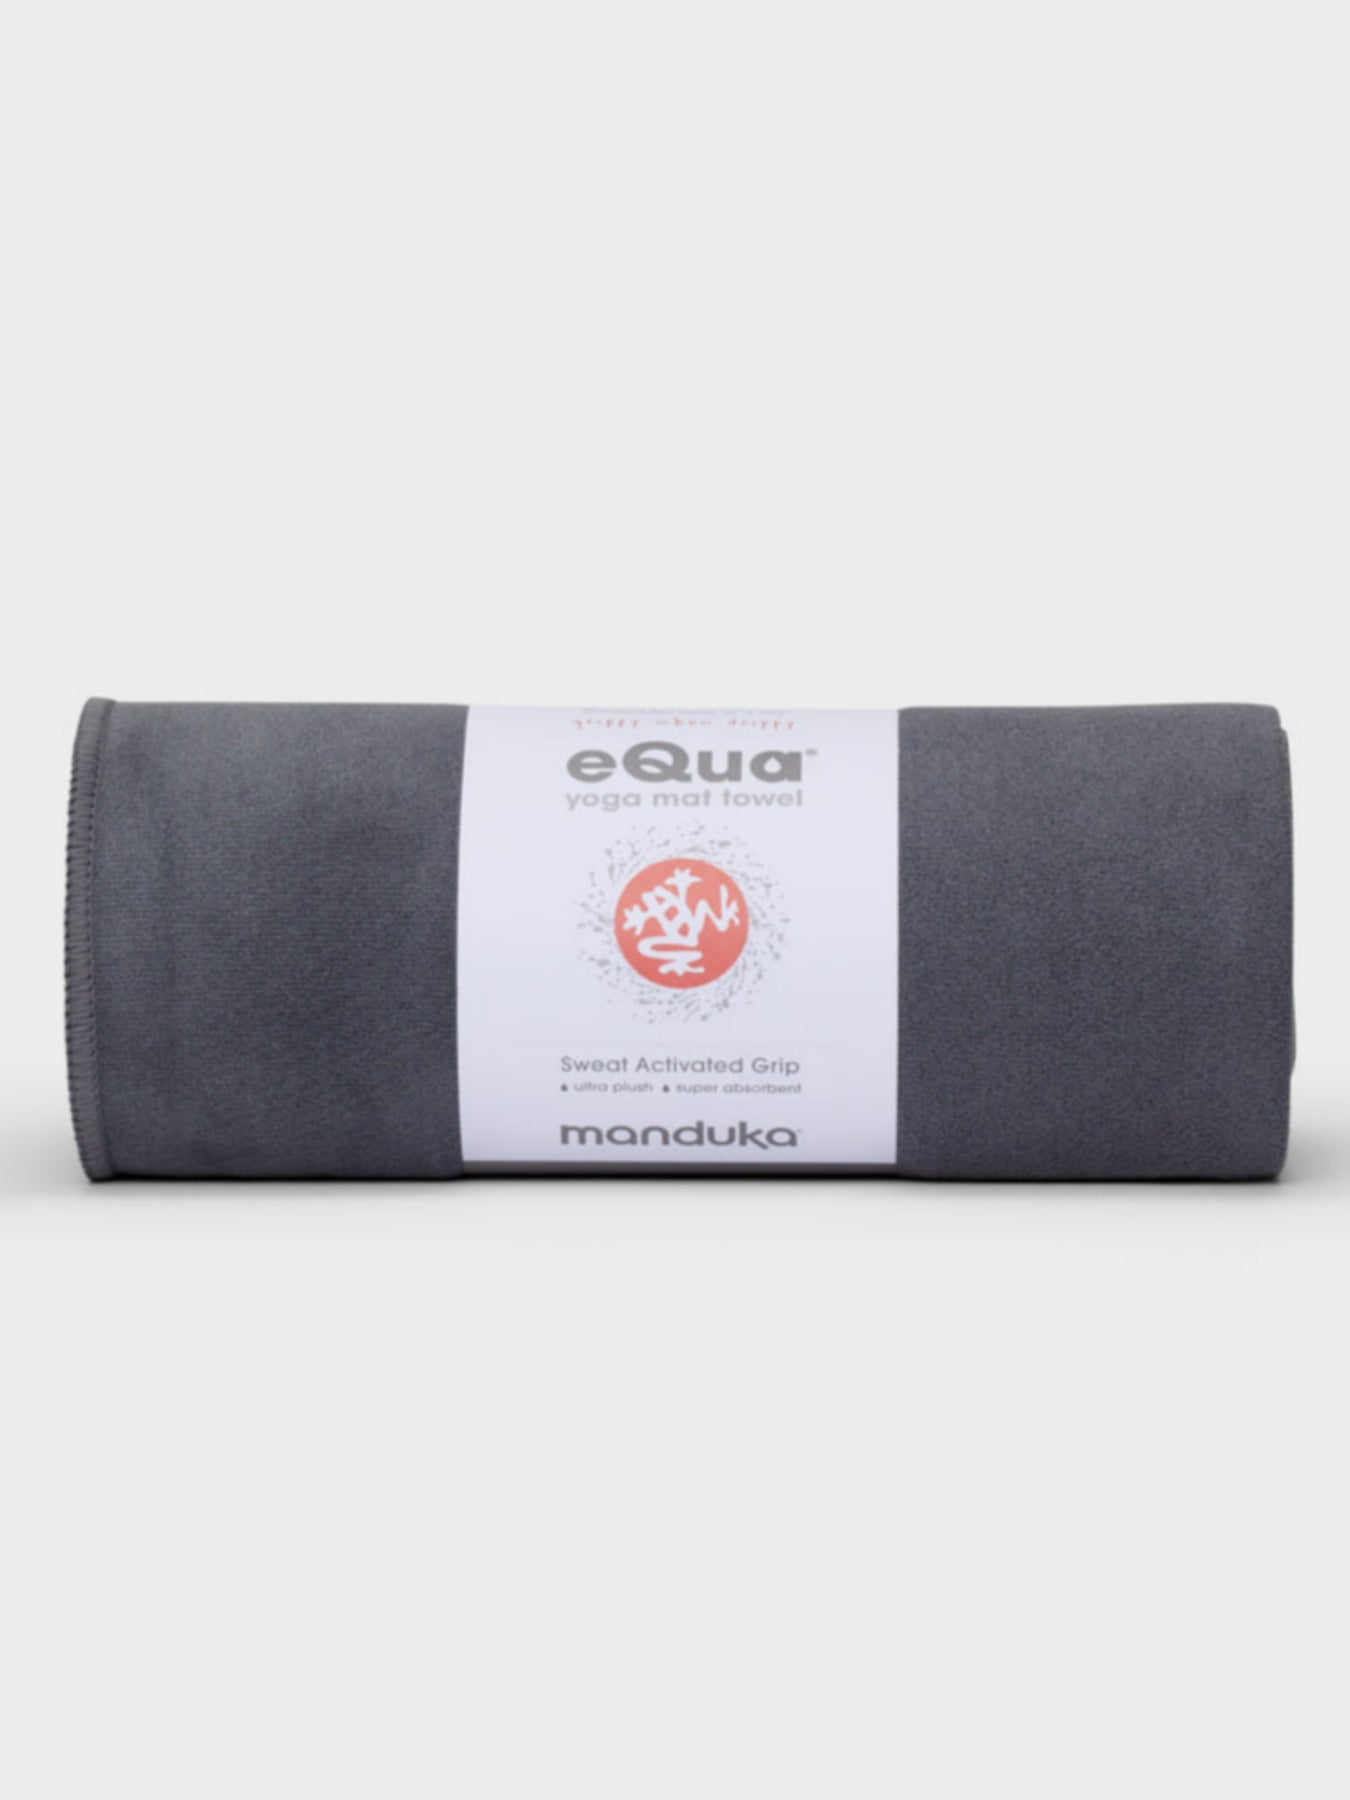  Manduka eQua Yoga Mat Towel - Quick Drying Microfiber,  Lightweight, Easy For Travel, Use In Hot Yoga, Vinyasa And Power, 72 Inch